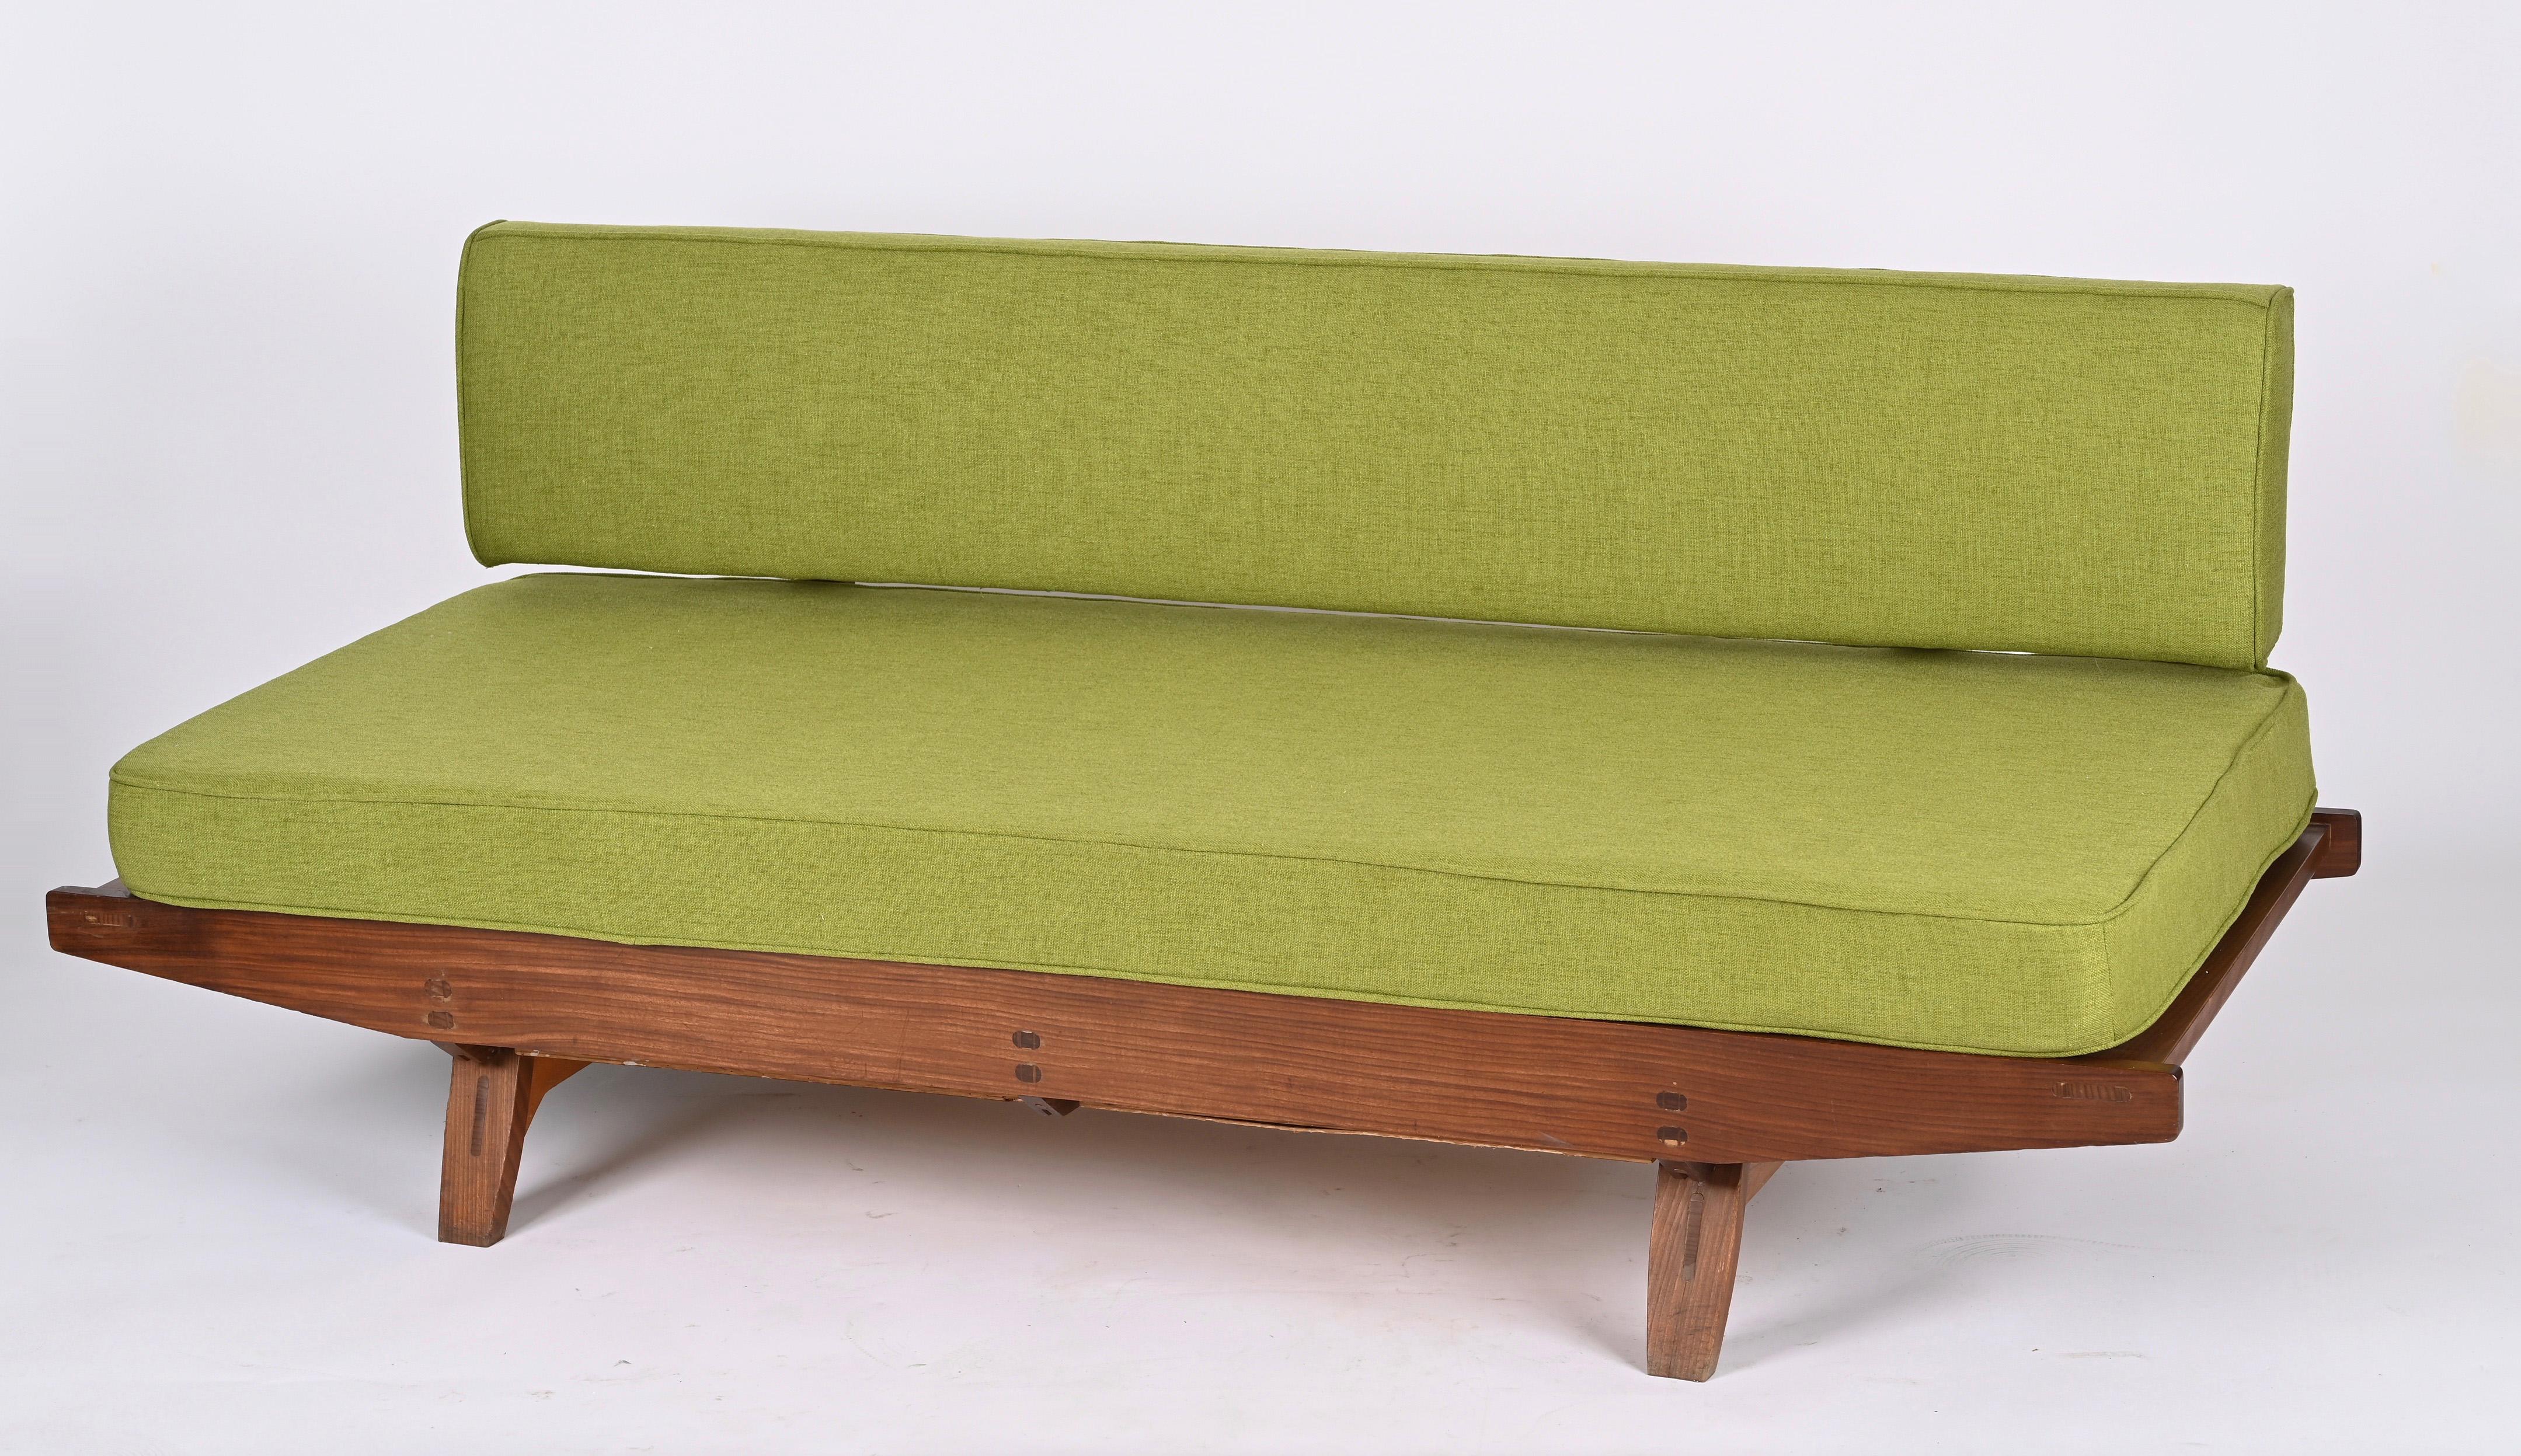 Scandinavian Modern Midcentury Danish Teak and Sage Green Fabric Extendable Sofa after Olsen, 1960s